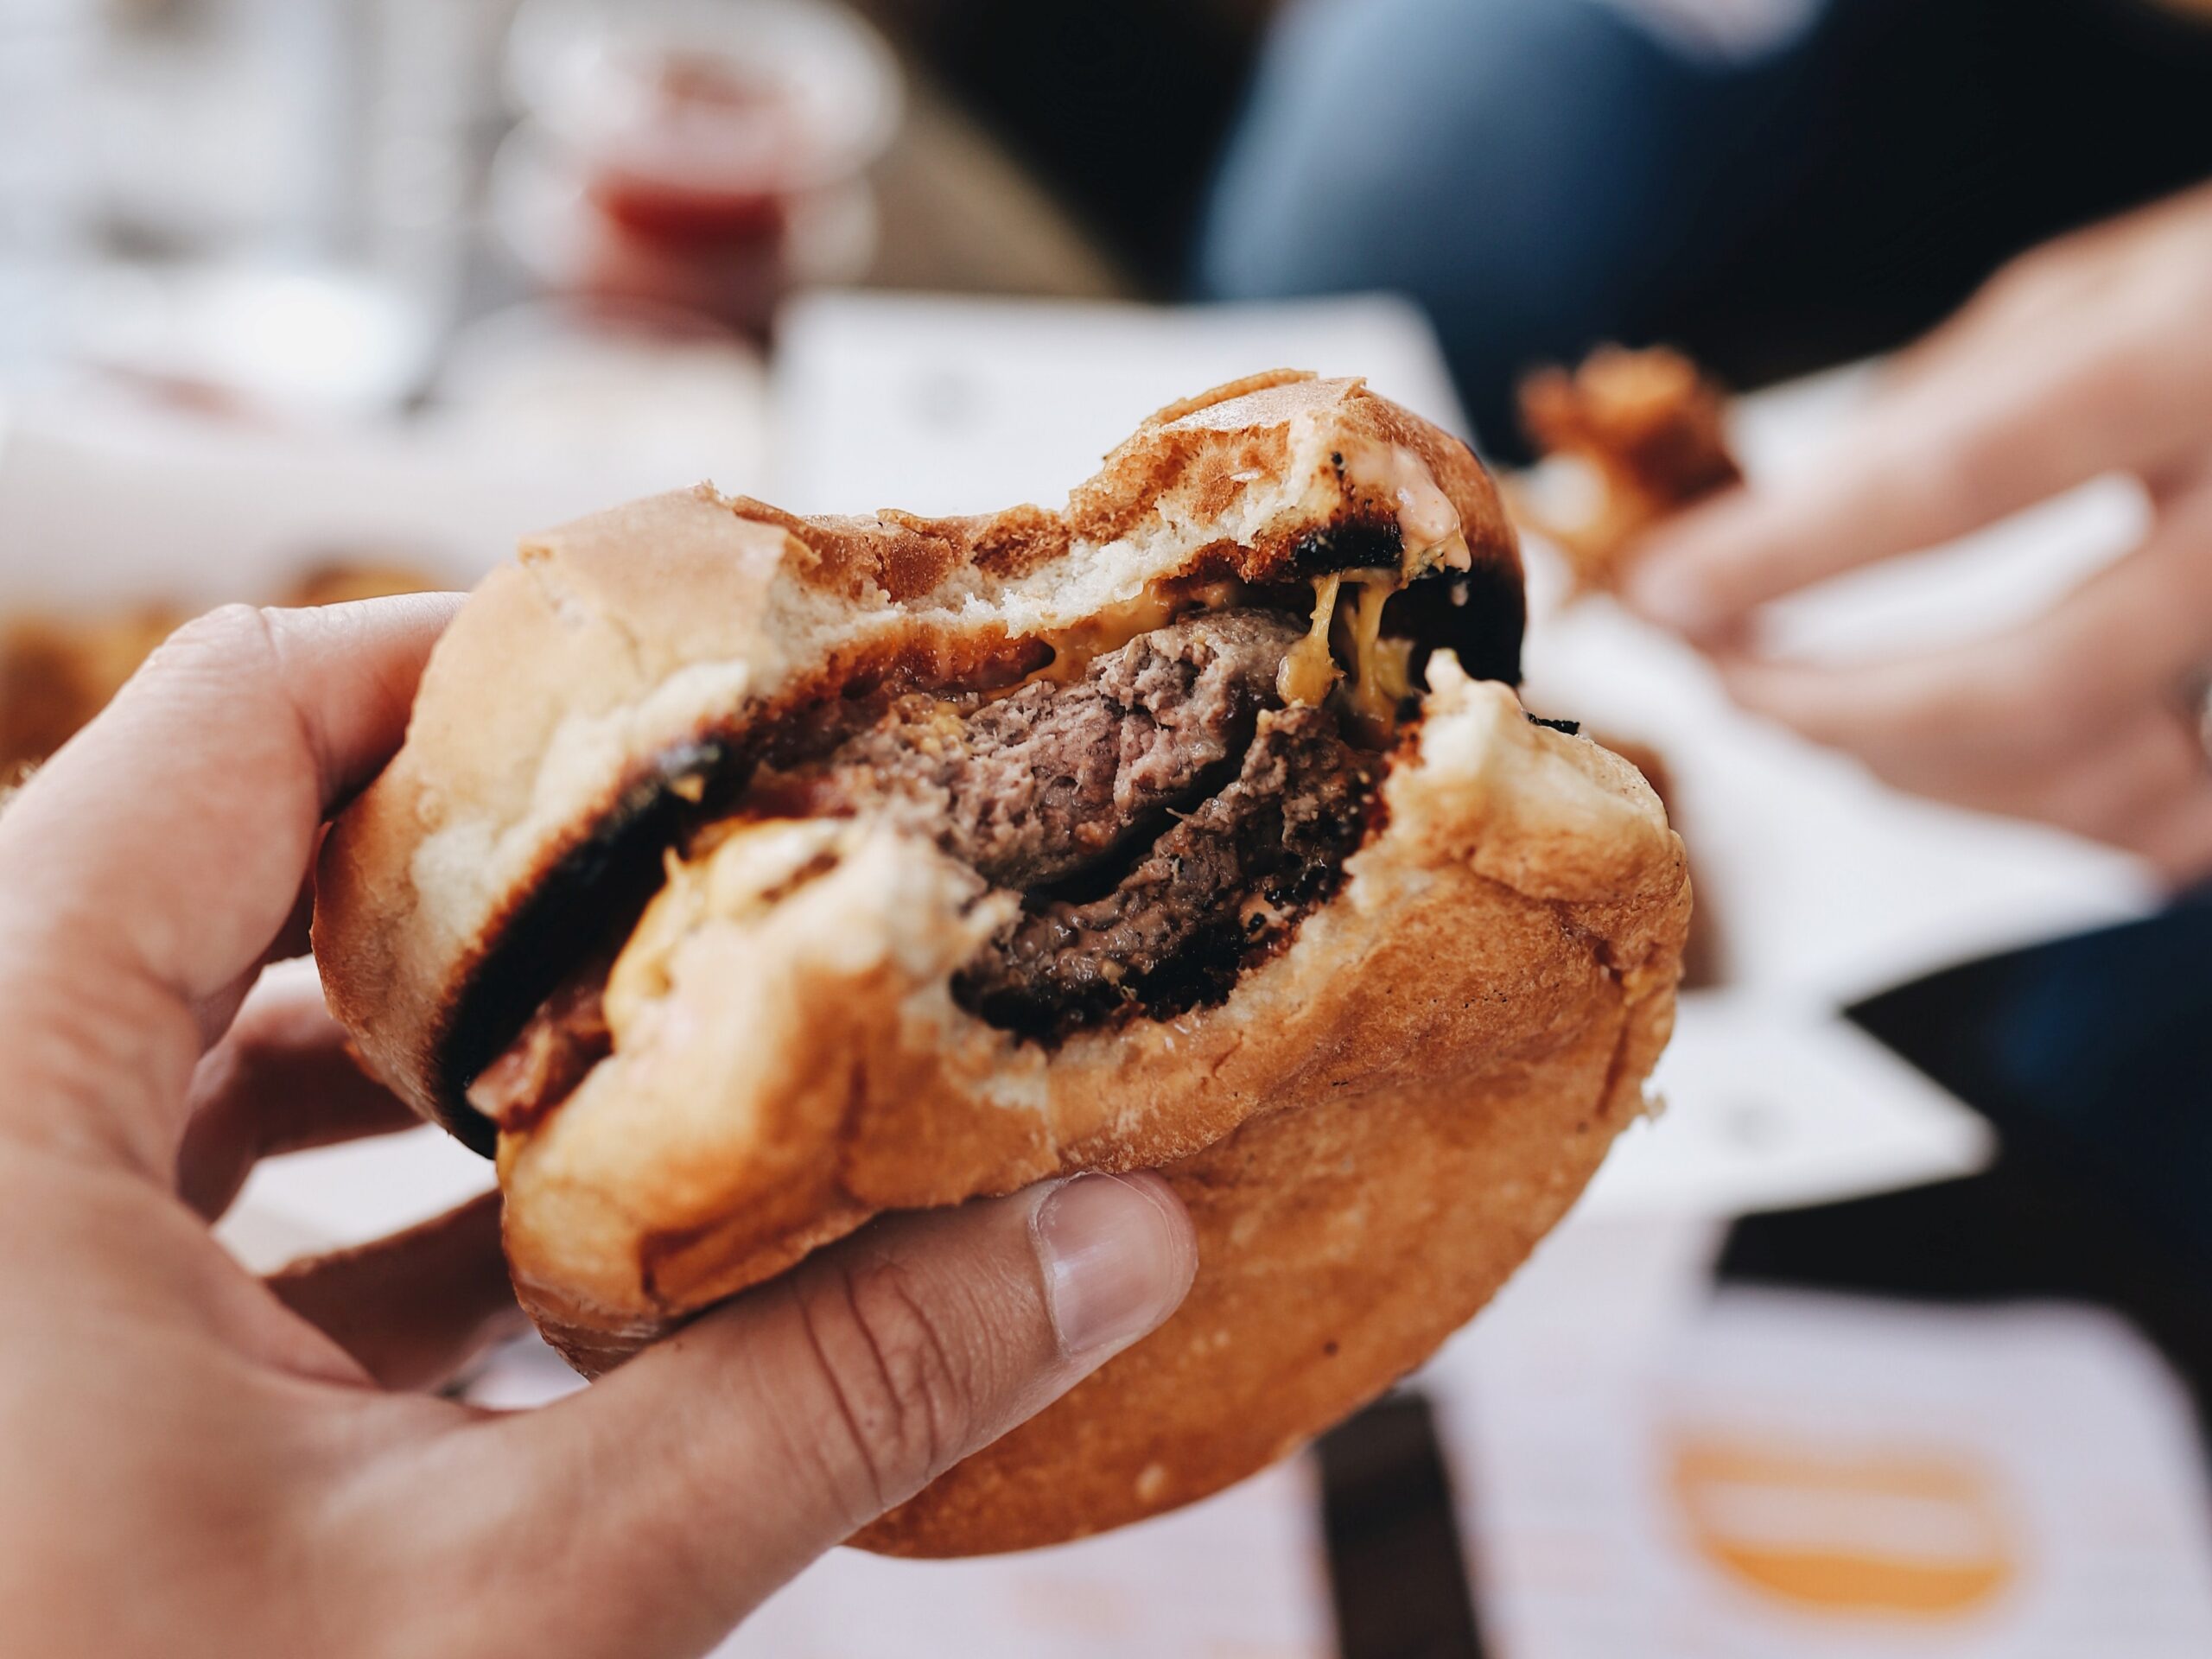 Burgertology, The best burgers in Waco